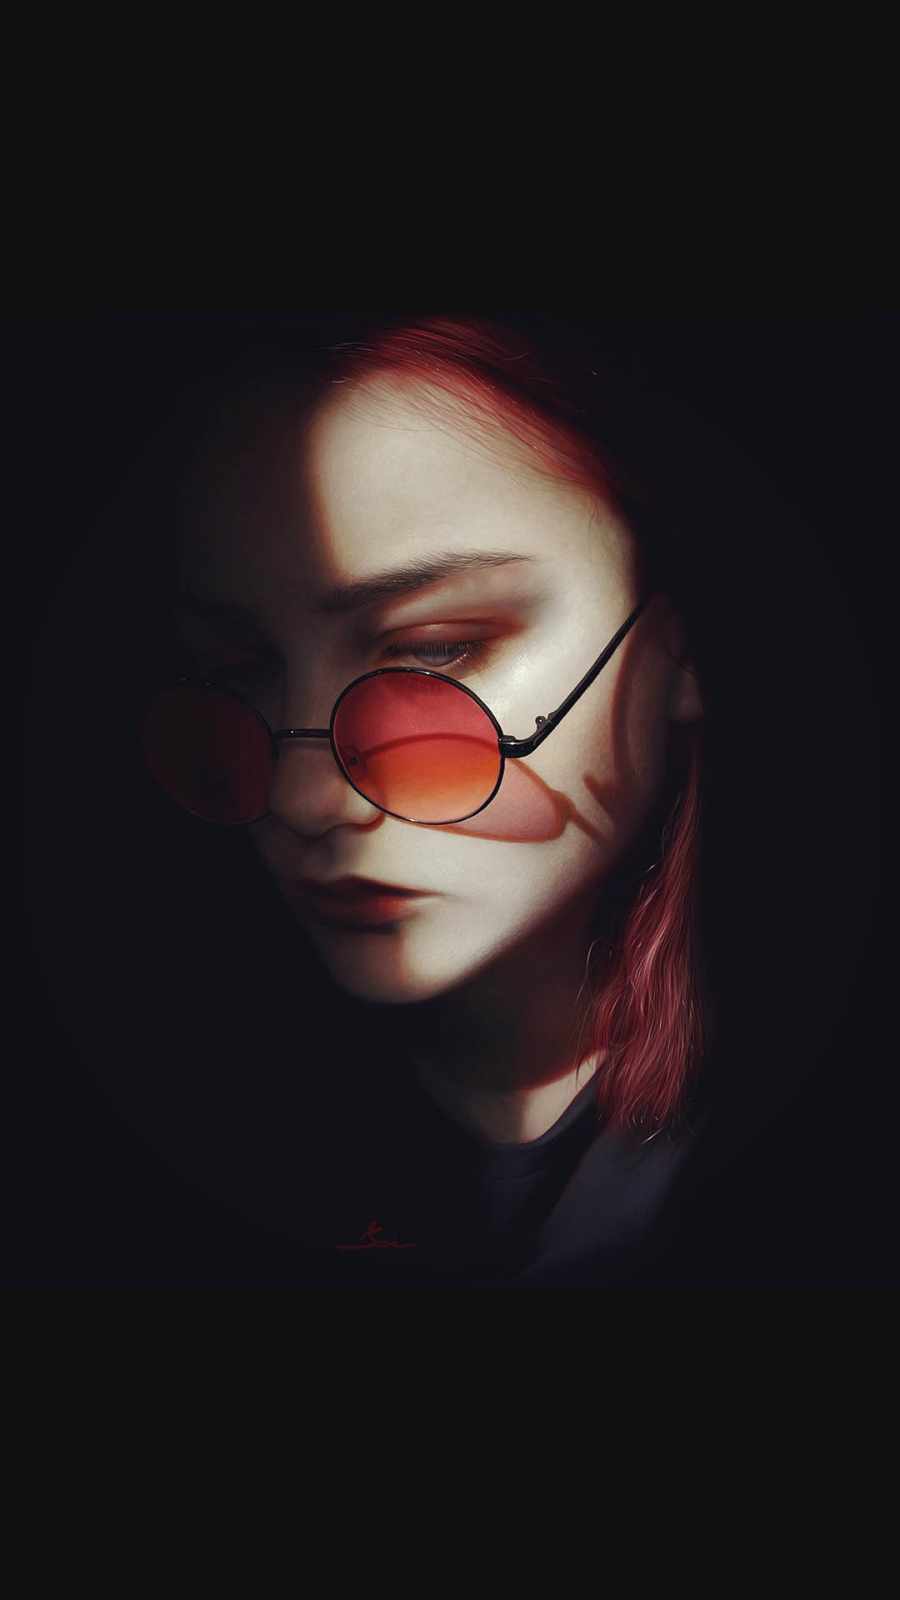 Girl in Dark iPhone Wallpaper